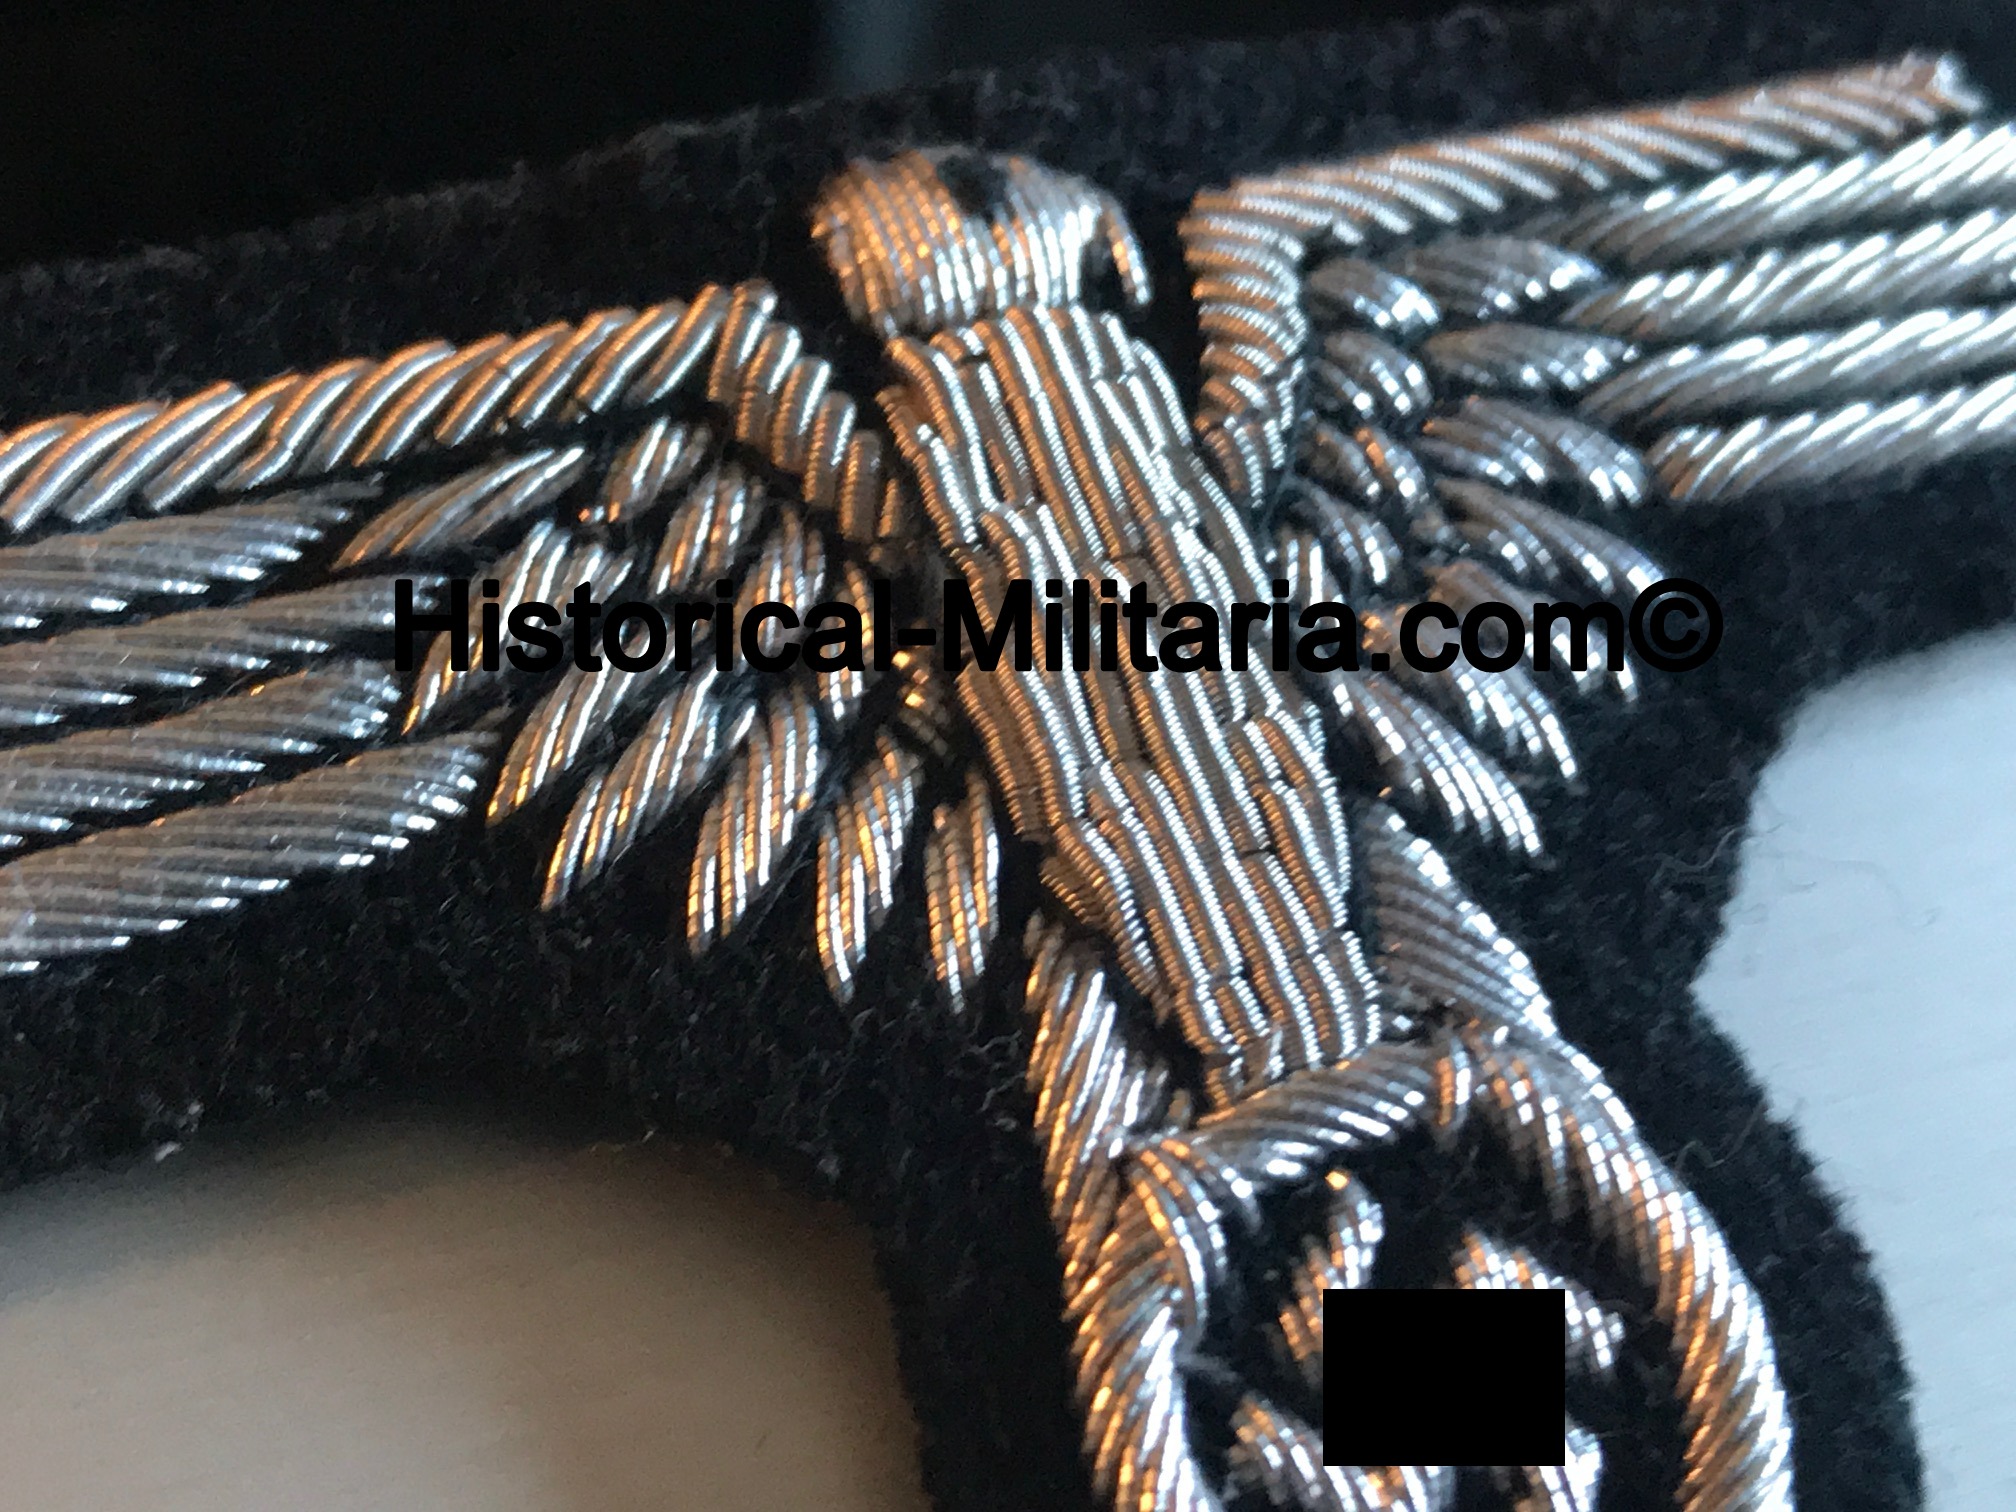 Waffen-SS Officer arm eagle in dull alluminium shade - Offiziersadler Ärmeladler Elite Waffen-SS - Aquila da braccio Ufficiale delle Waffen-SS